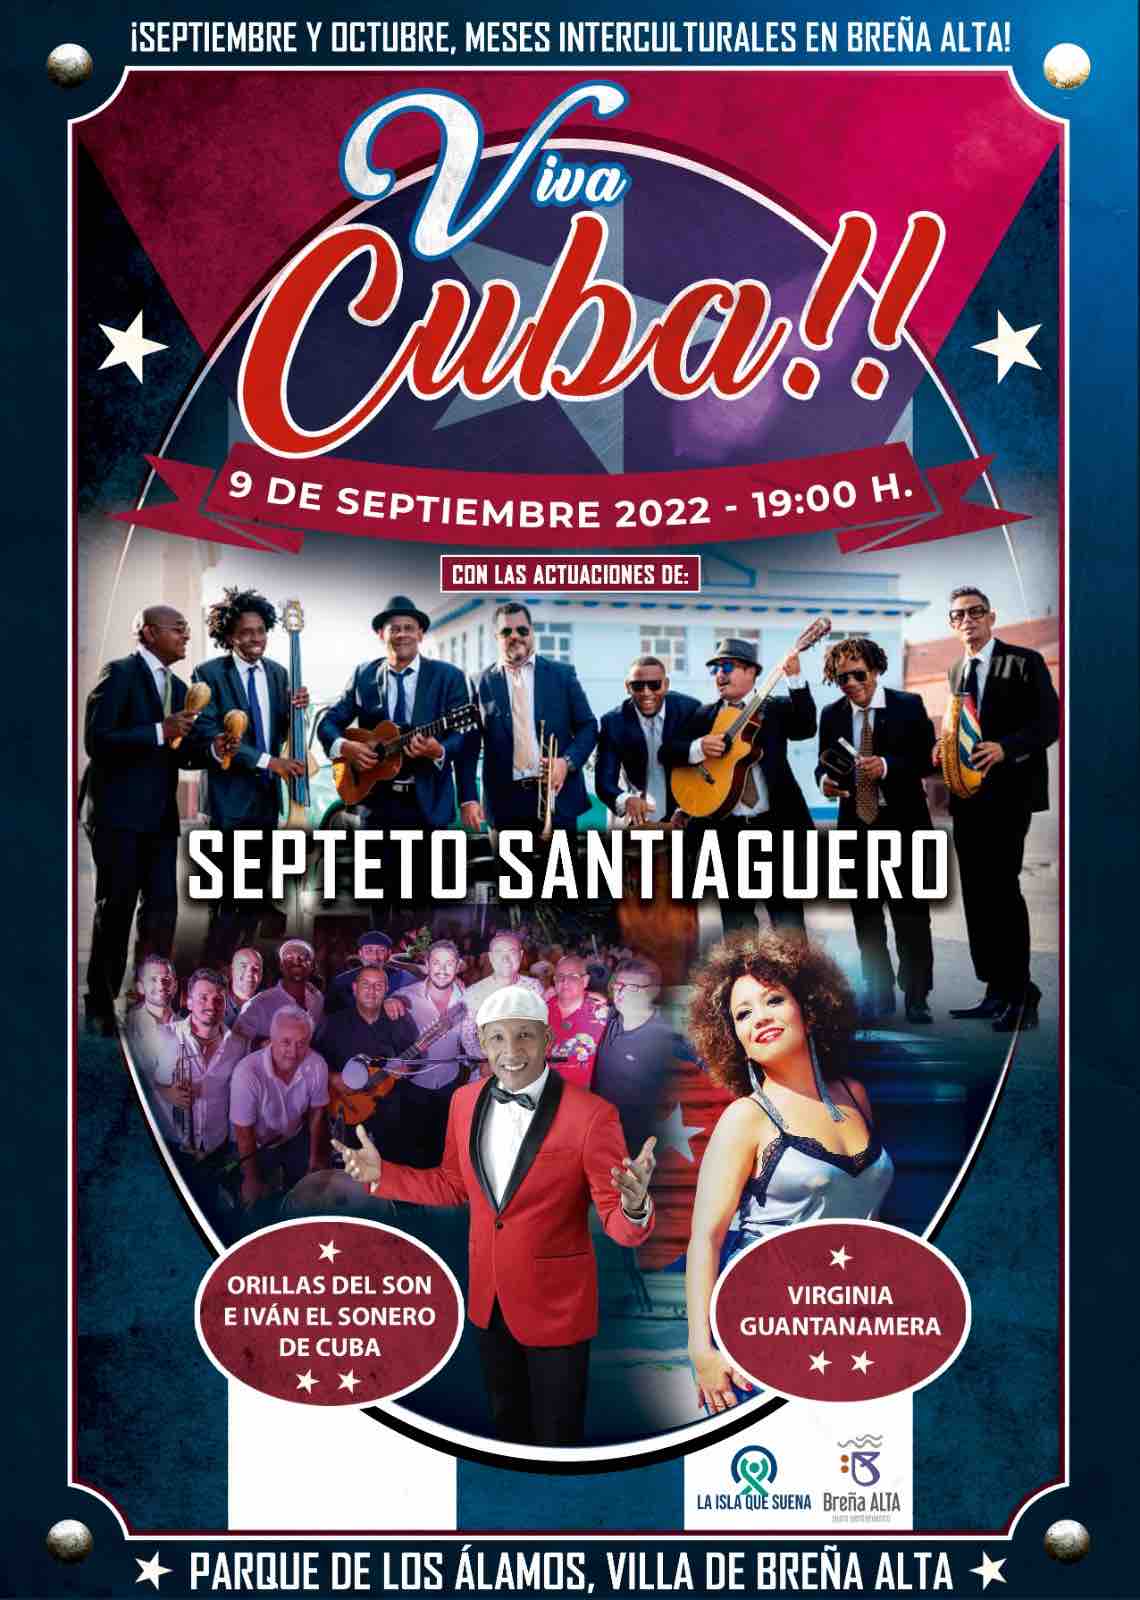 El Septeto Santiaguero trae a Breña Alta el máximo exponente mundial de la música tradicional cubana